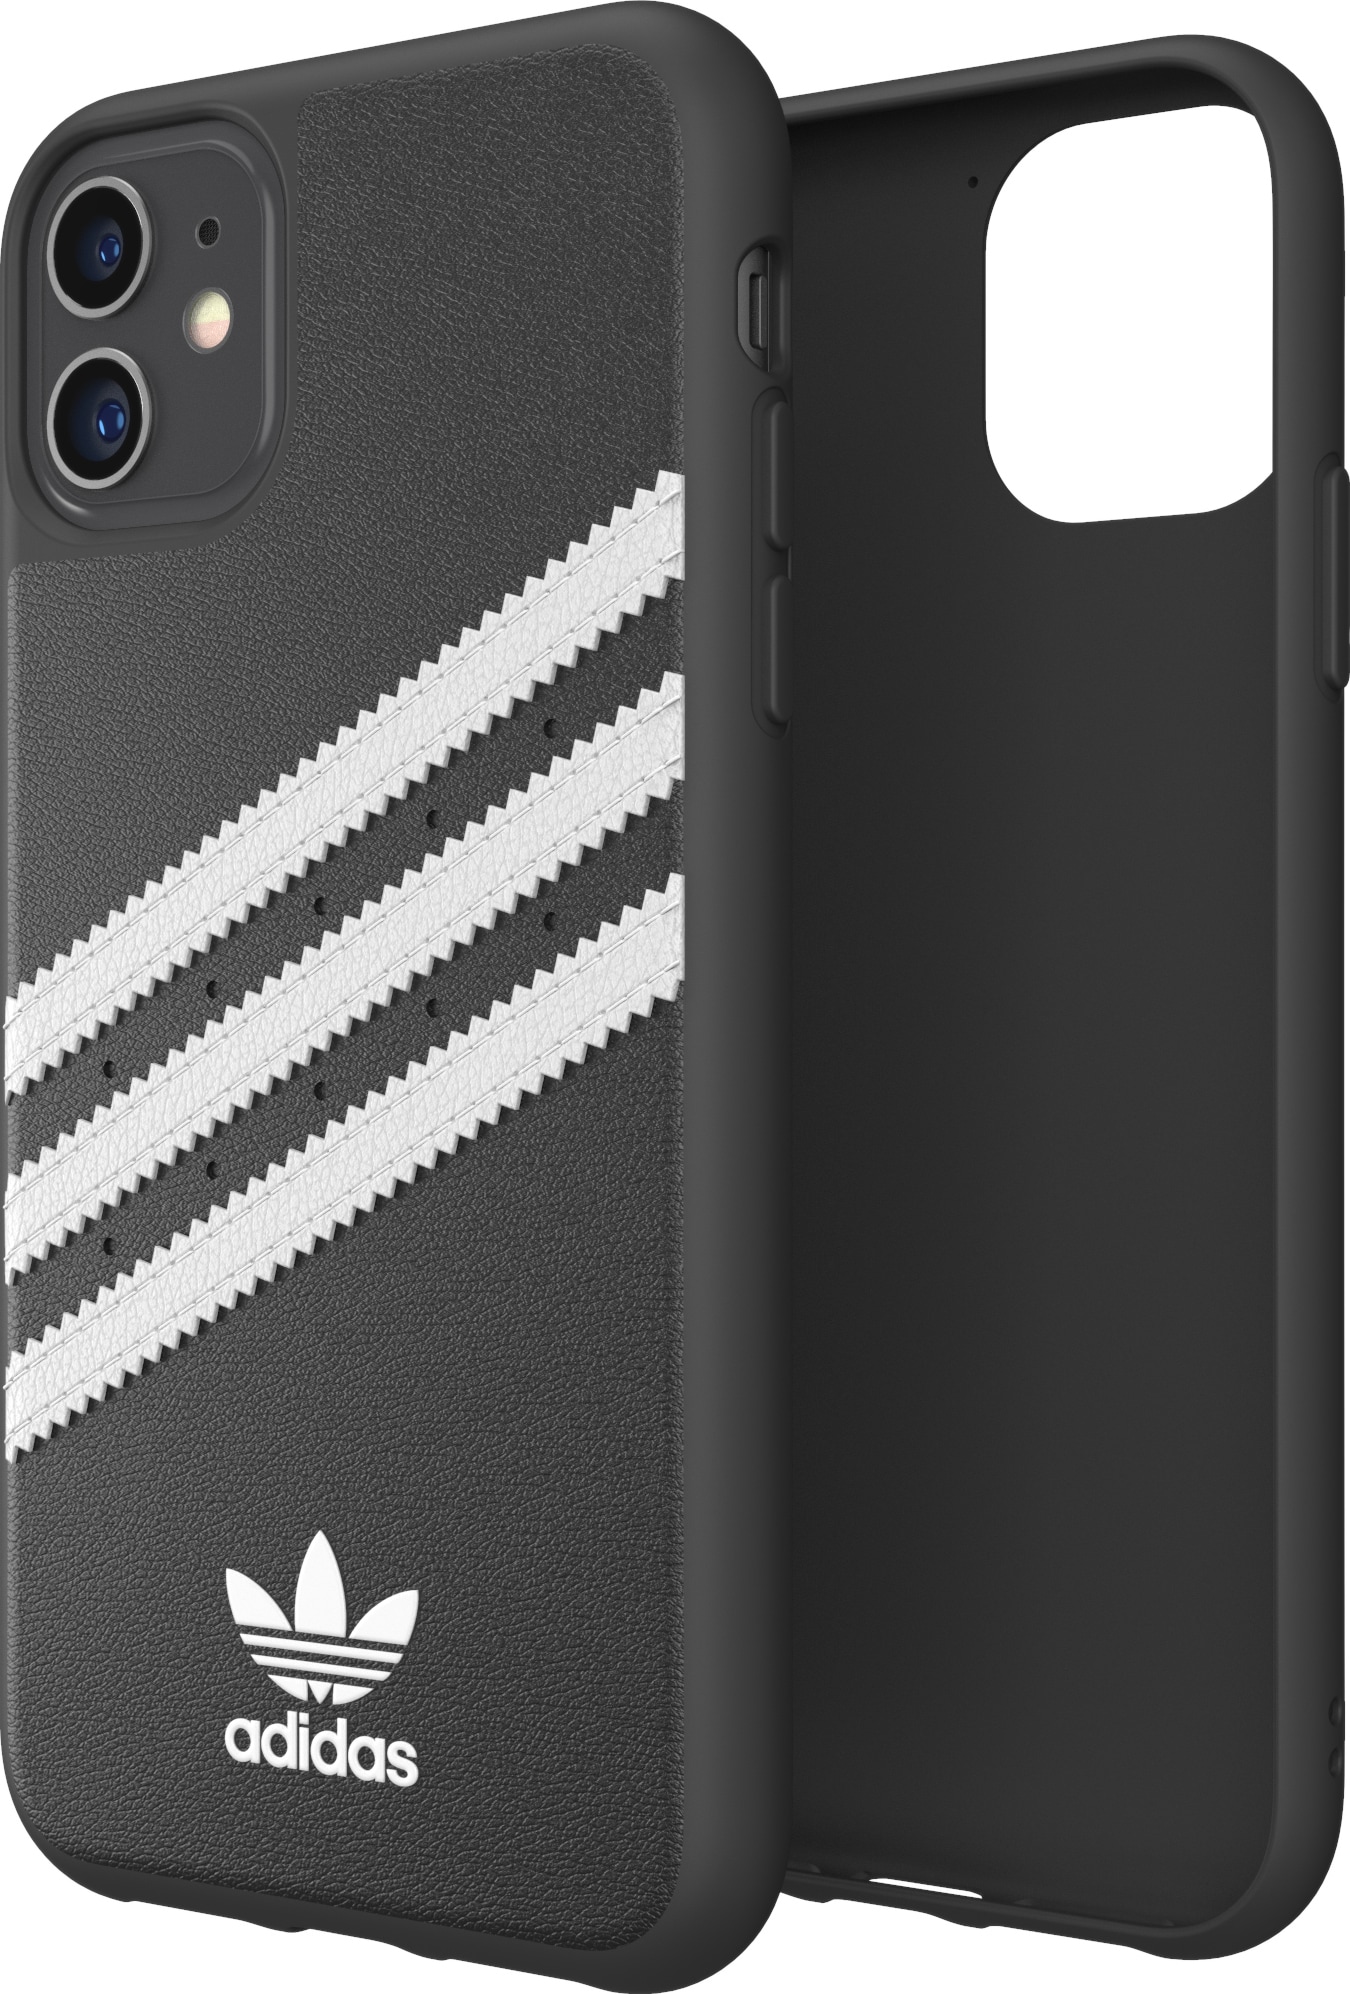 Adidas PU iPhone cover (sort/hvid) |